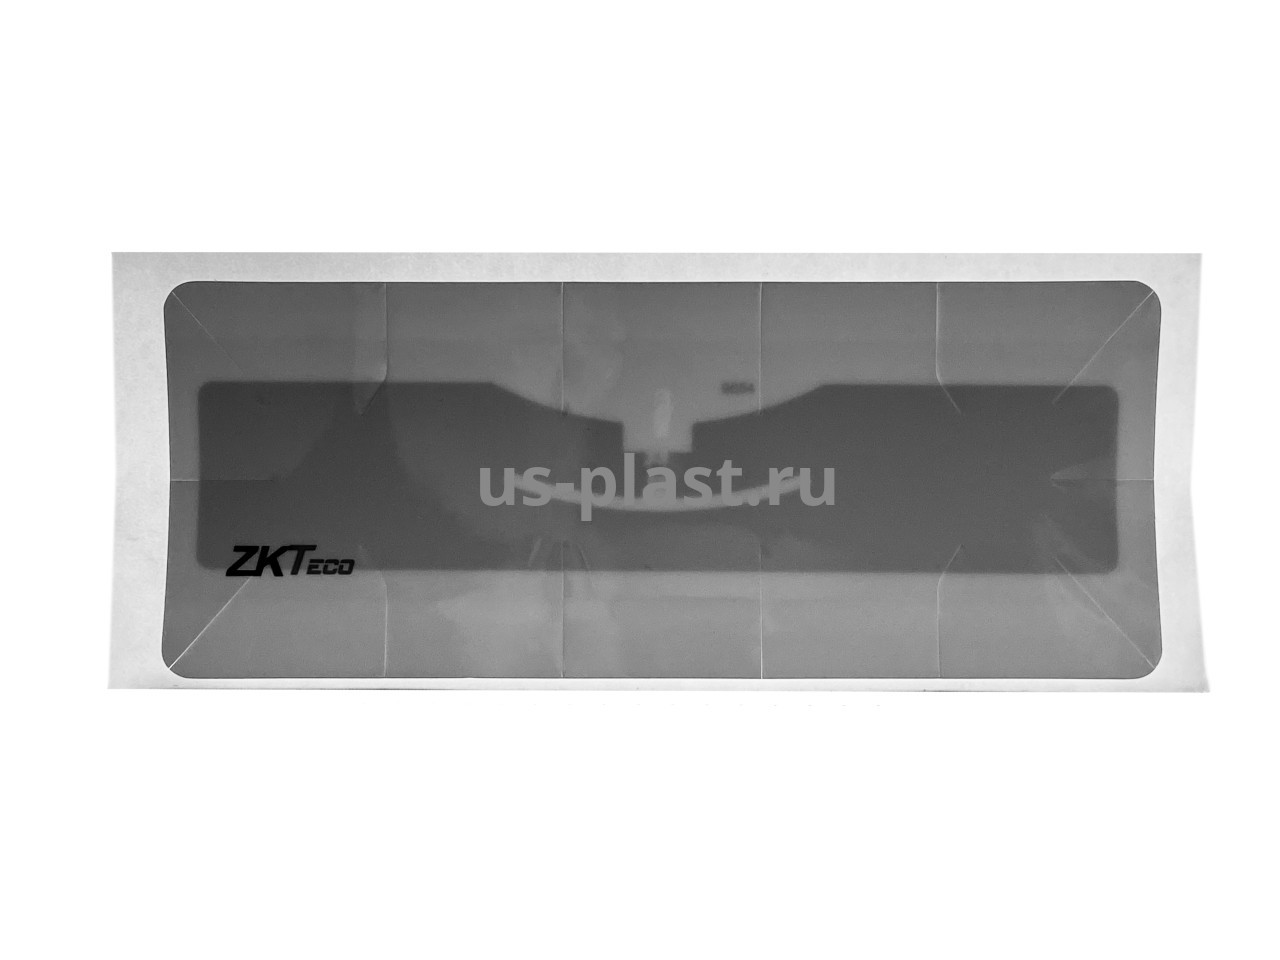 UHF RFID метка на лобовое стекло автомобиля ZKTeco UHF Parking Tag (упаковка 10 шт). Фото N5